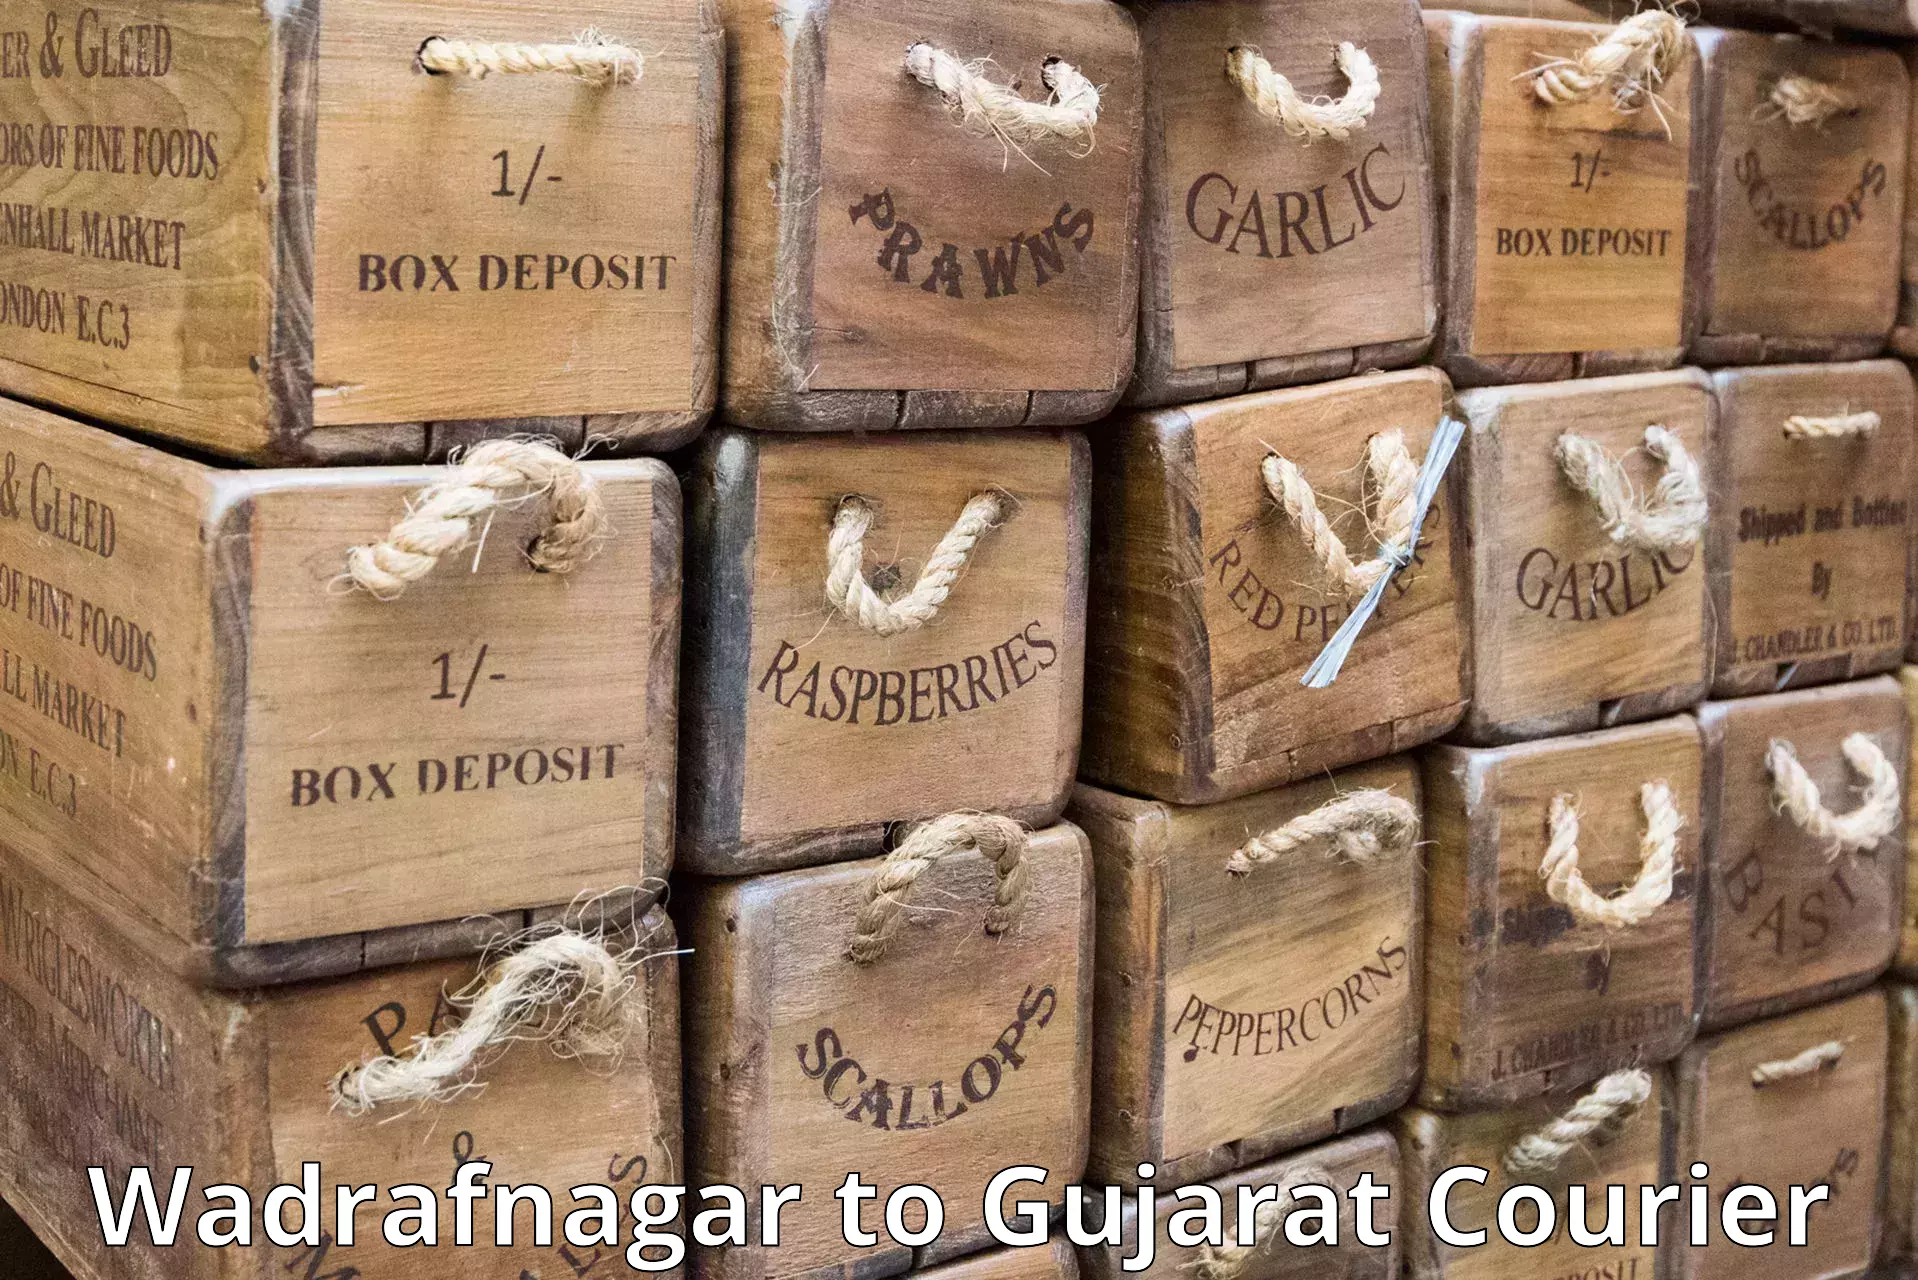 Sustainable shipping practices Wadrafnagar to Gujarat